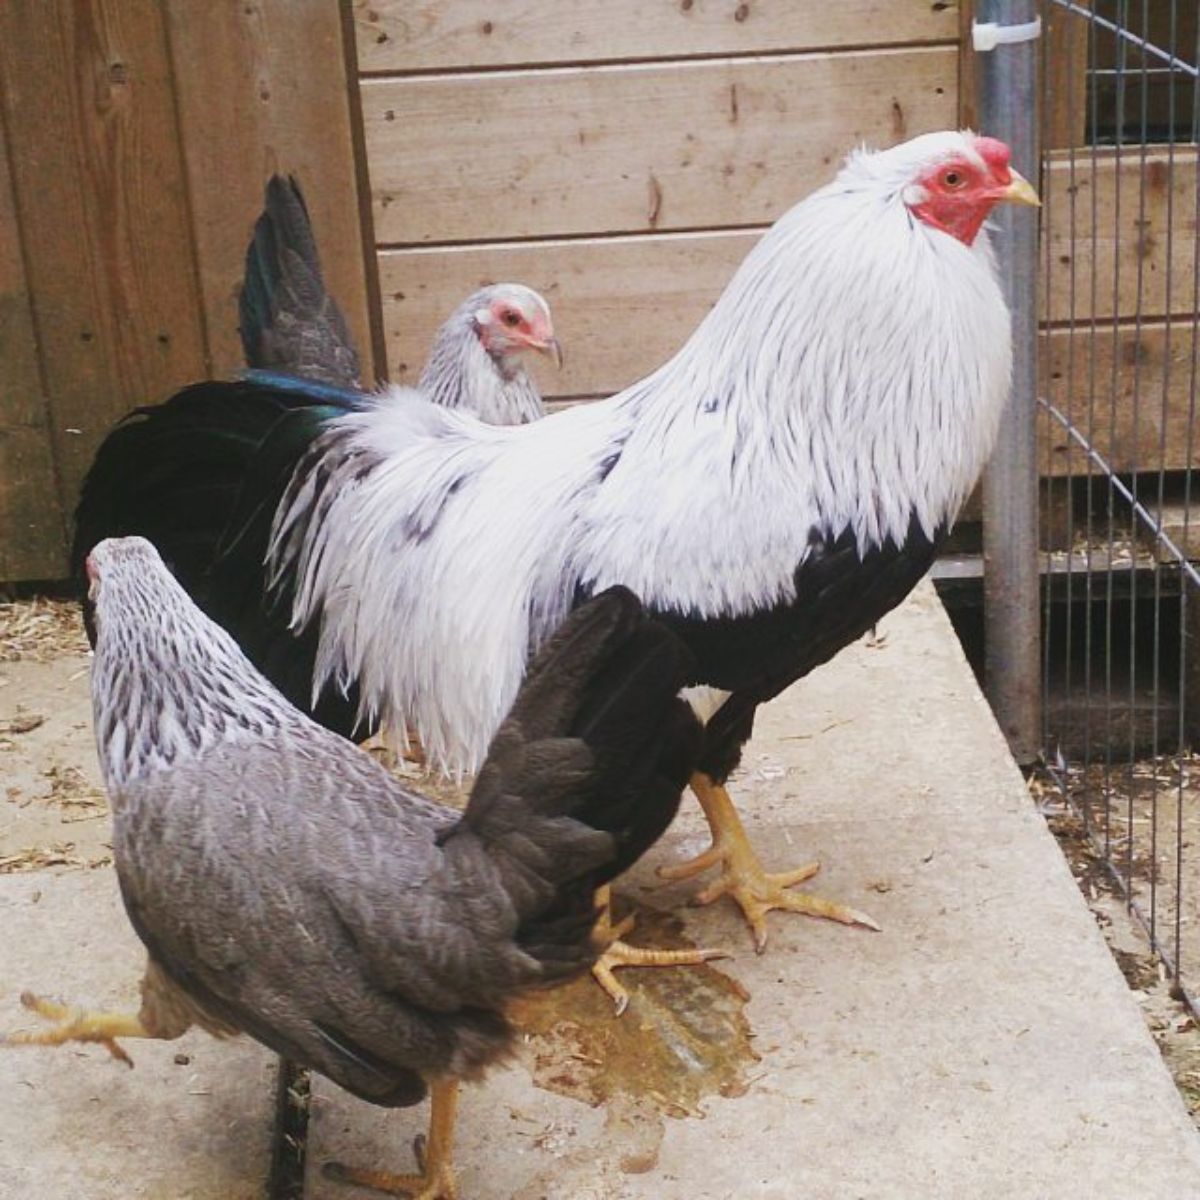 A Kraienkoppe rooster and two Kraienkoppe hens in a chicken coop.